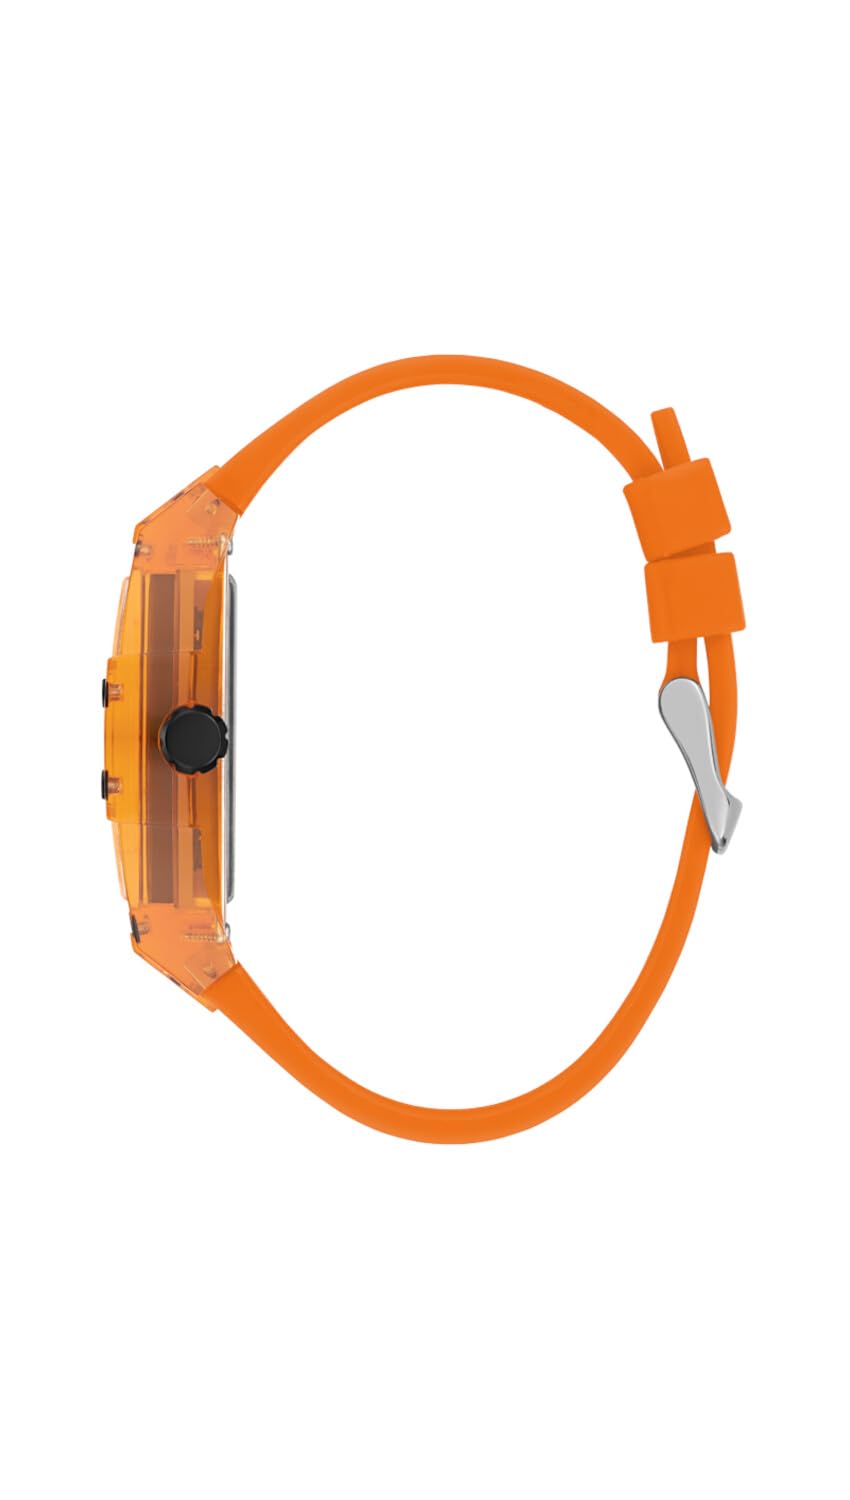 GUESS Men's 43mm Watch - Orange Strap Navy Dial Orange Case